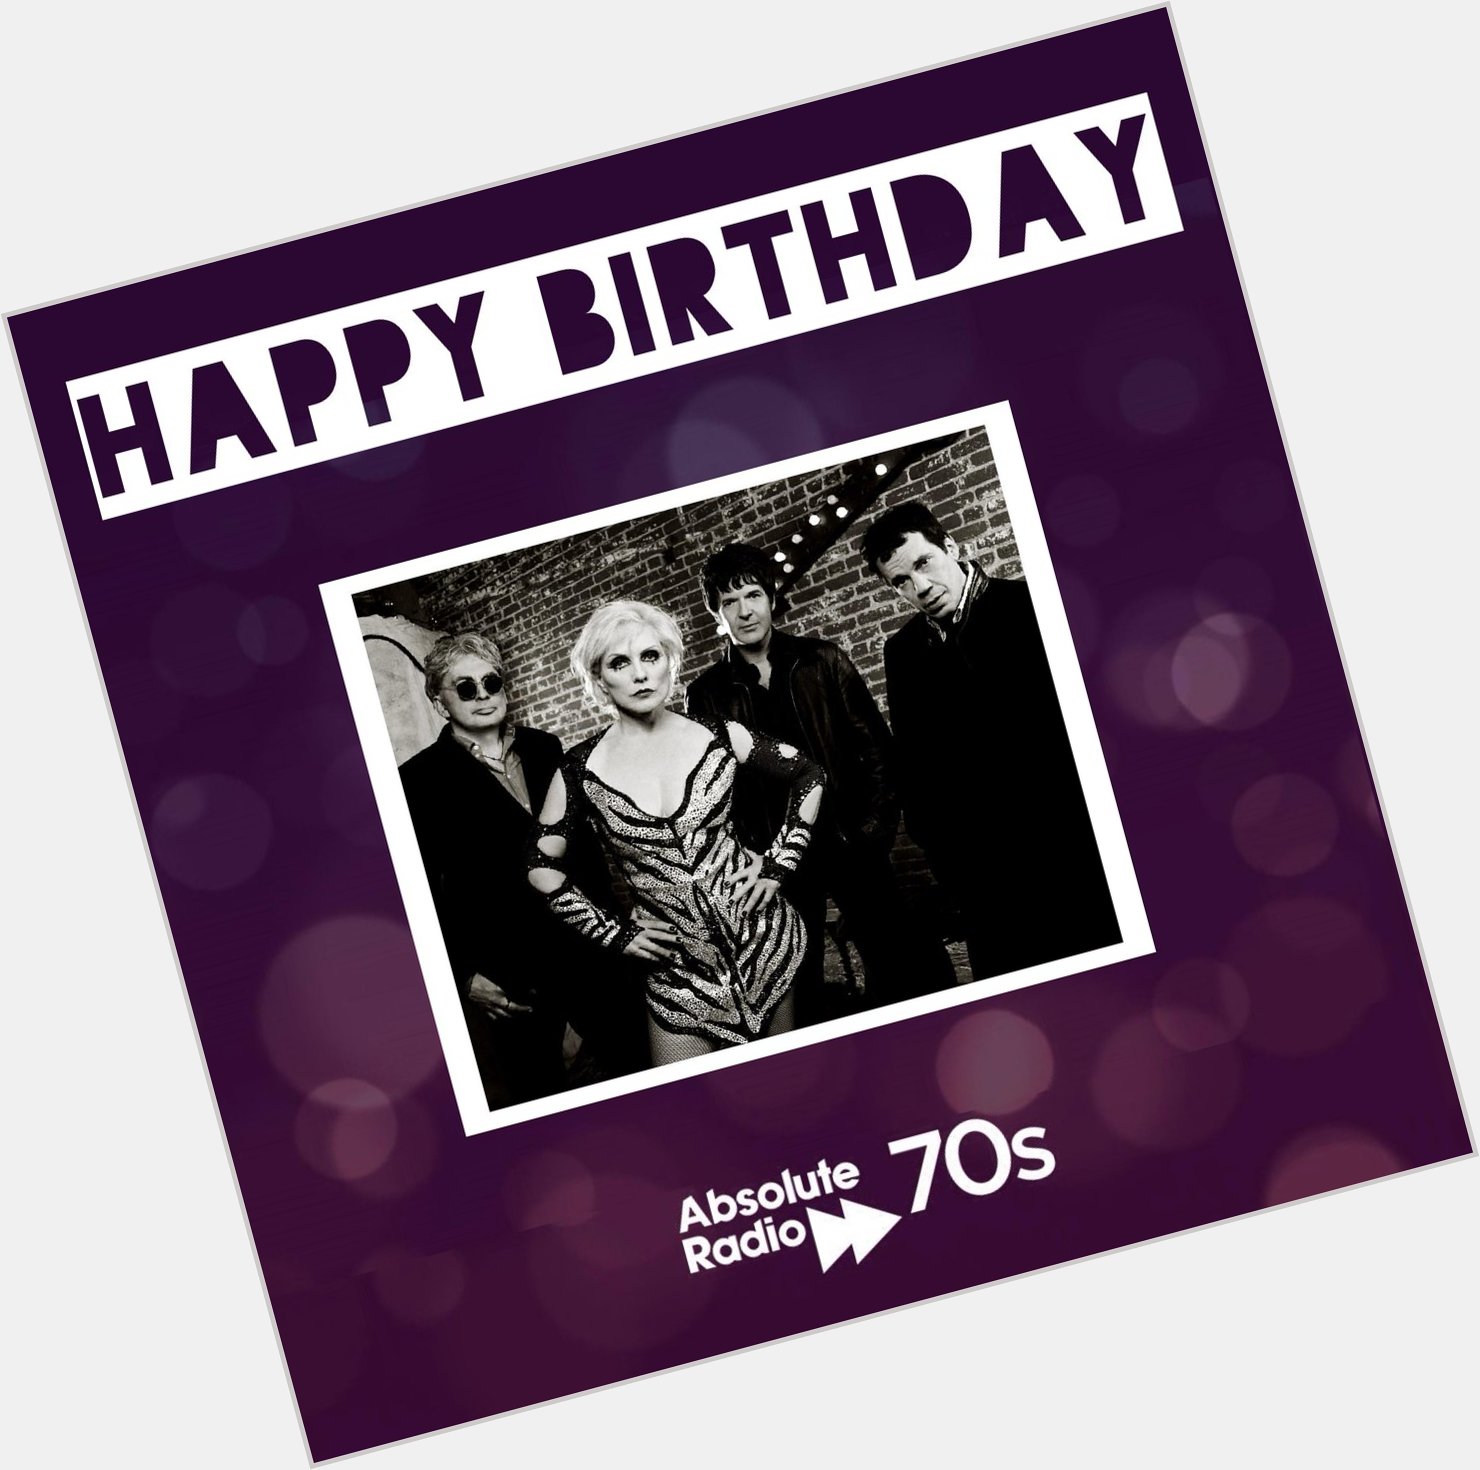 Were wishing a very happy birthday to Blondie drummer Clem Burke. 59 today! 